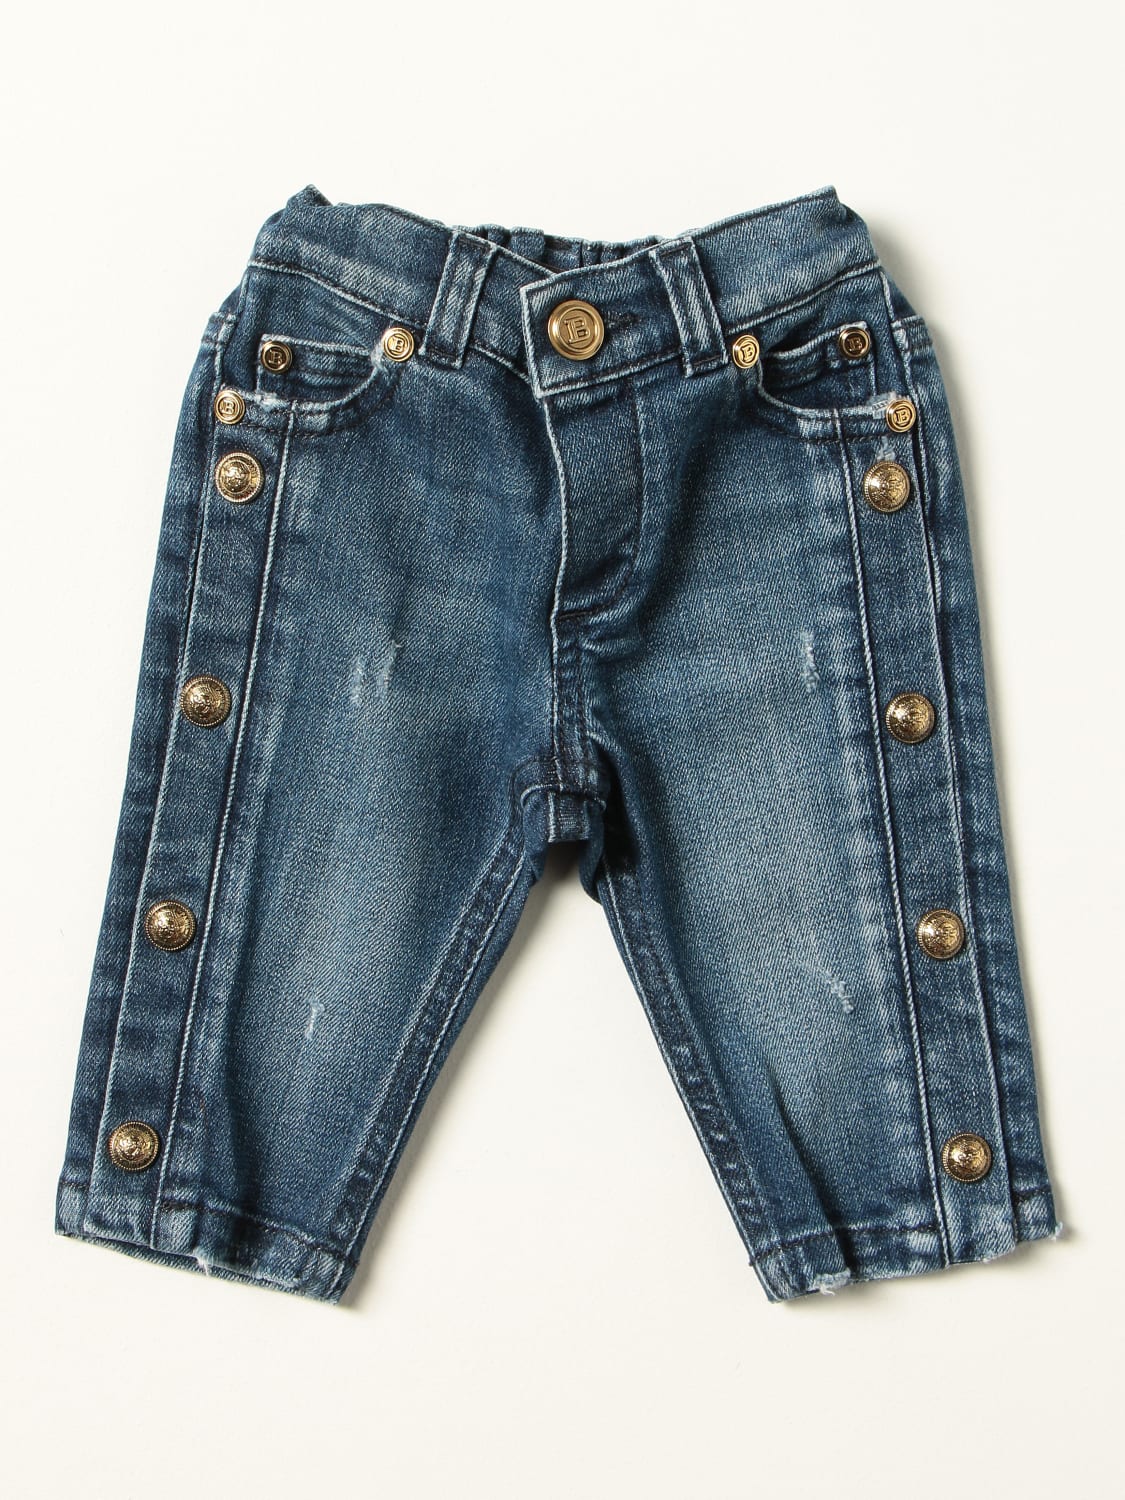 Balmain Outlet: 5-pocket jeans with metal buttons - Denim | Balmain jeans 6P6850D0004 online on